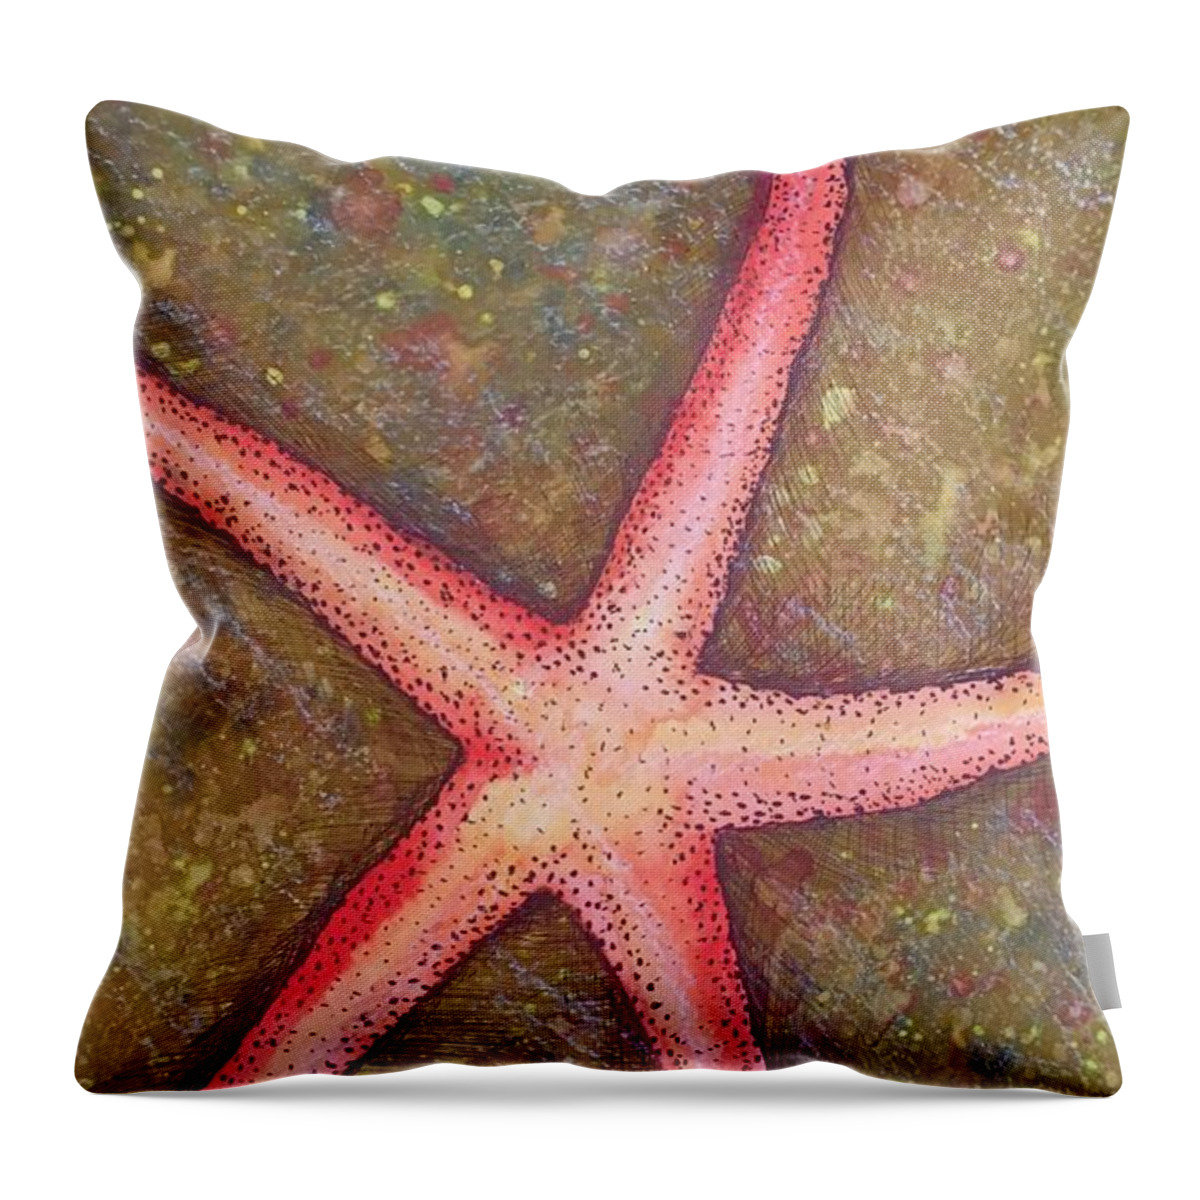 Starfish Throw Pillow featuring the painting Starfish by Mastiff Studios